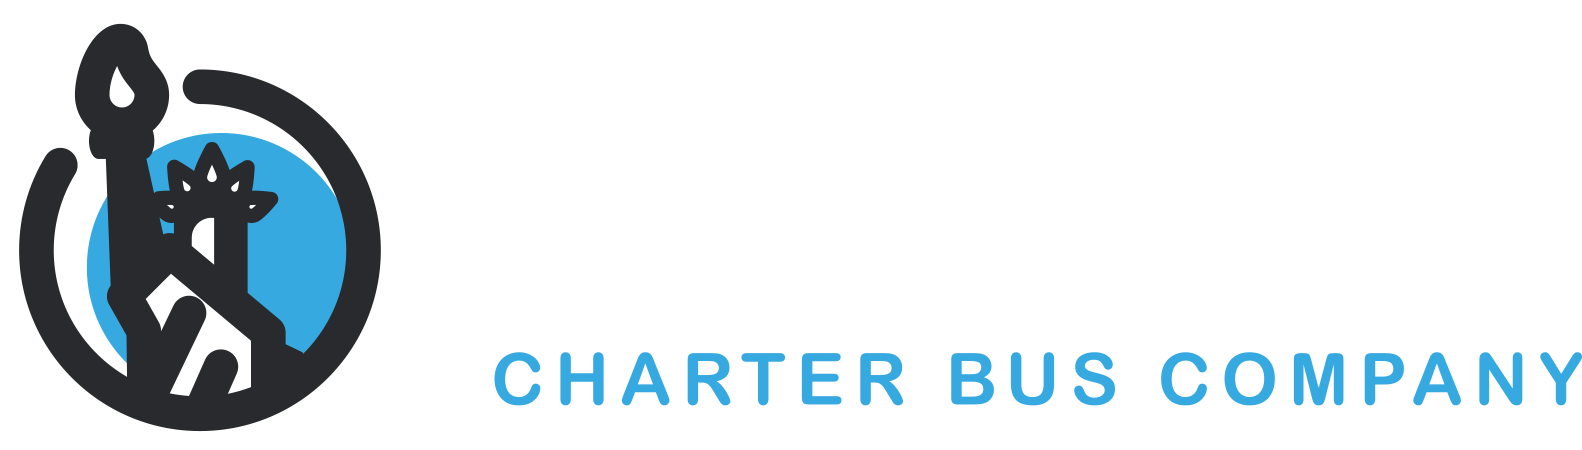 New York charter bus company